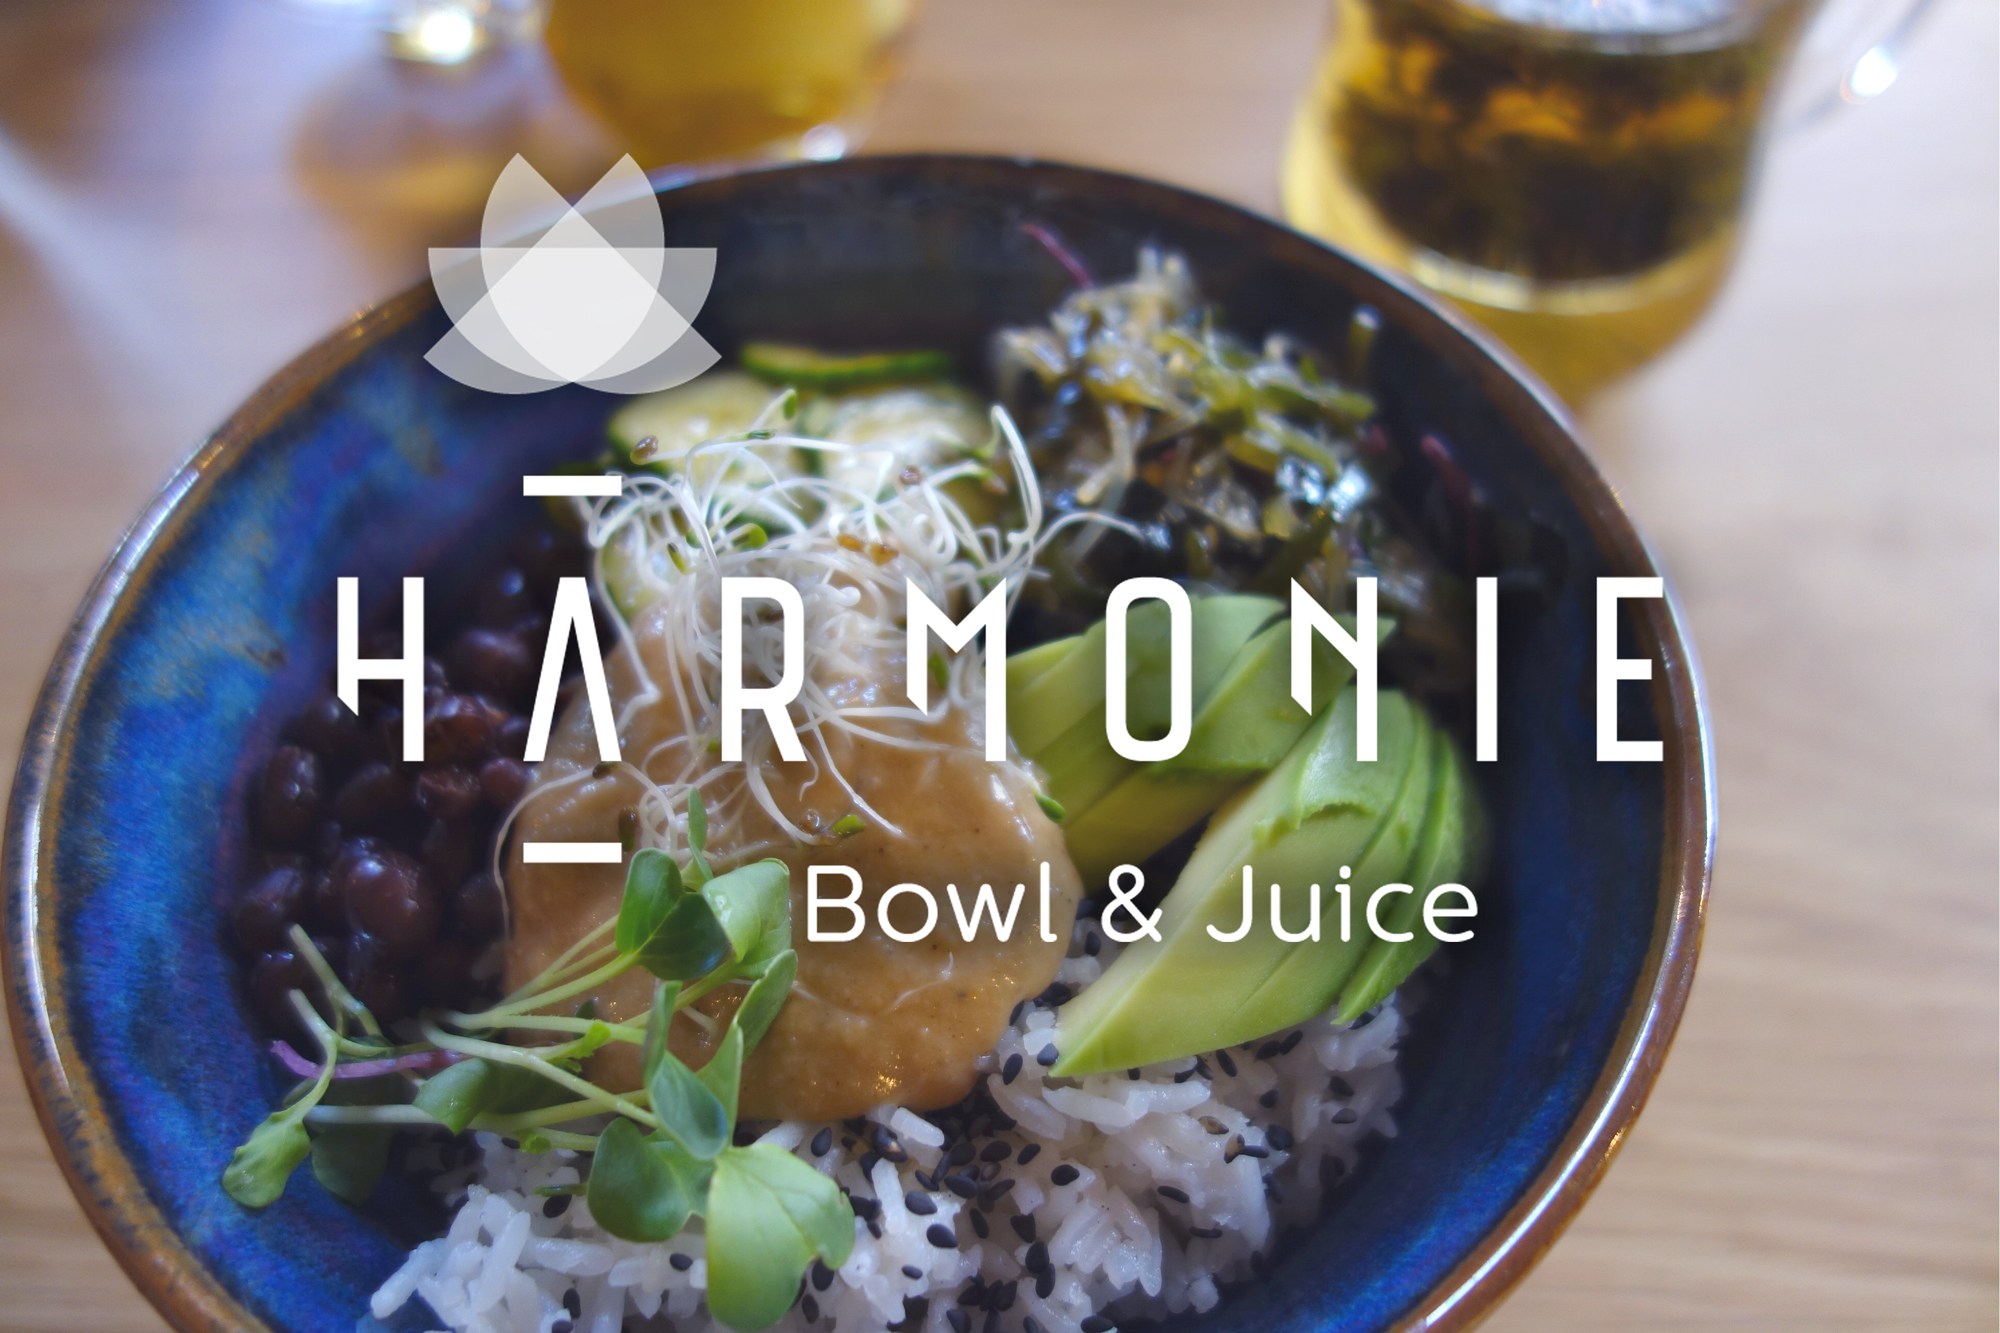 harmonie-bowl-juice-restaurant-strasbourg